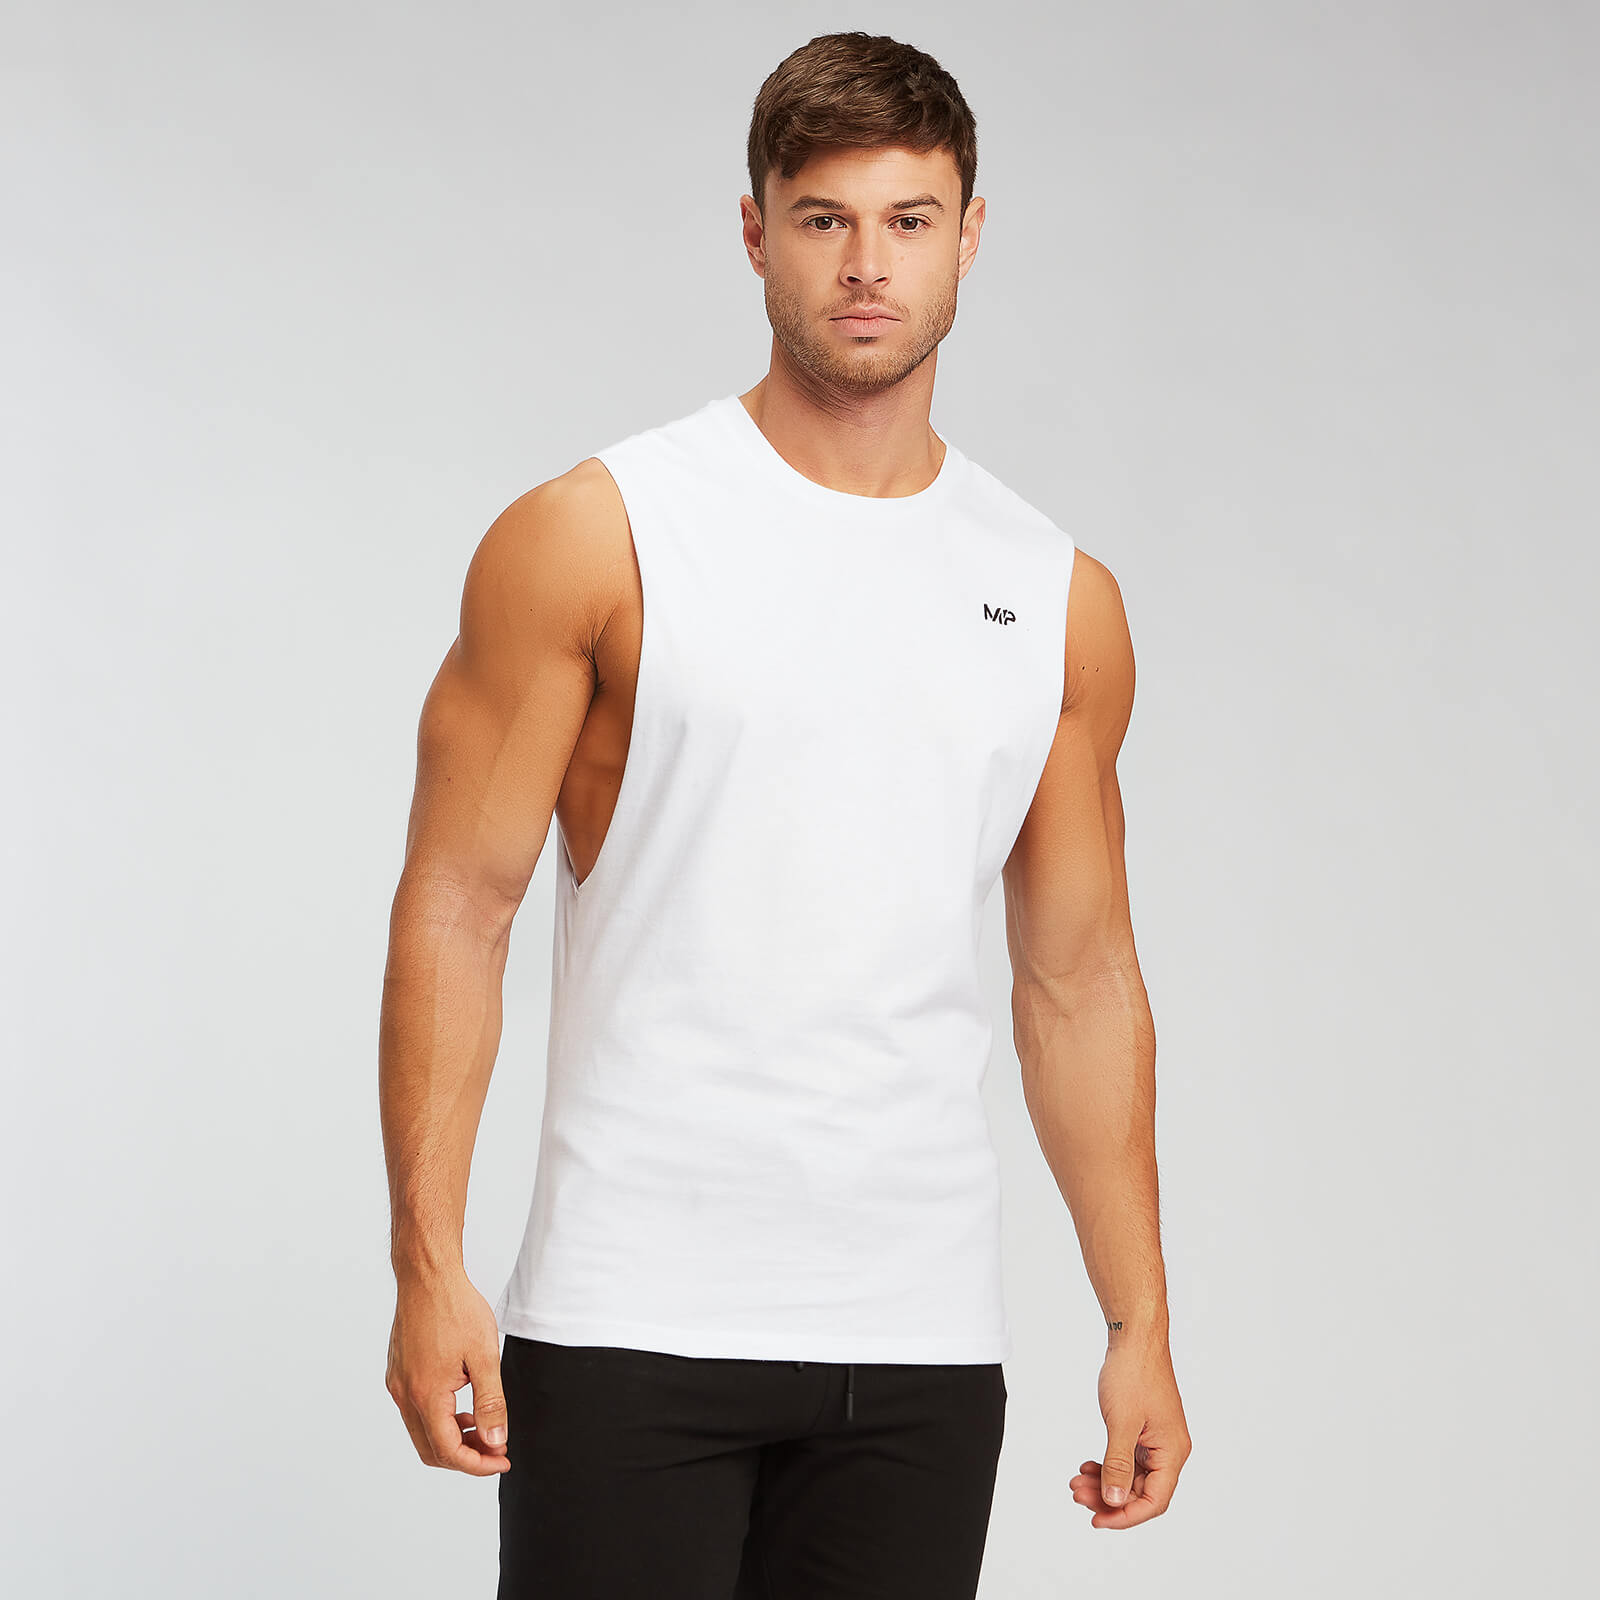 Mp Camiseta sin Mangas con Sisas Caídas Essentials - Blanco - XXXL